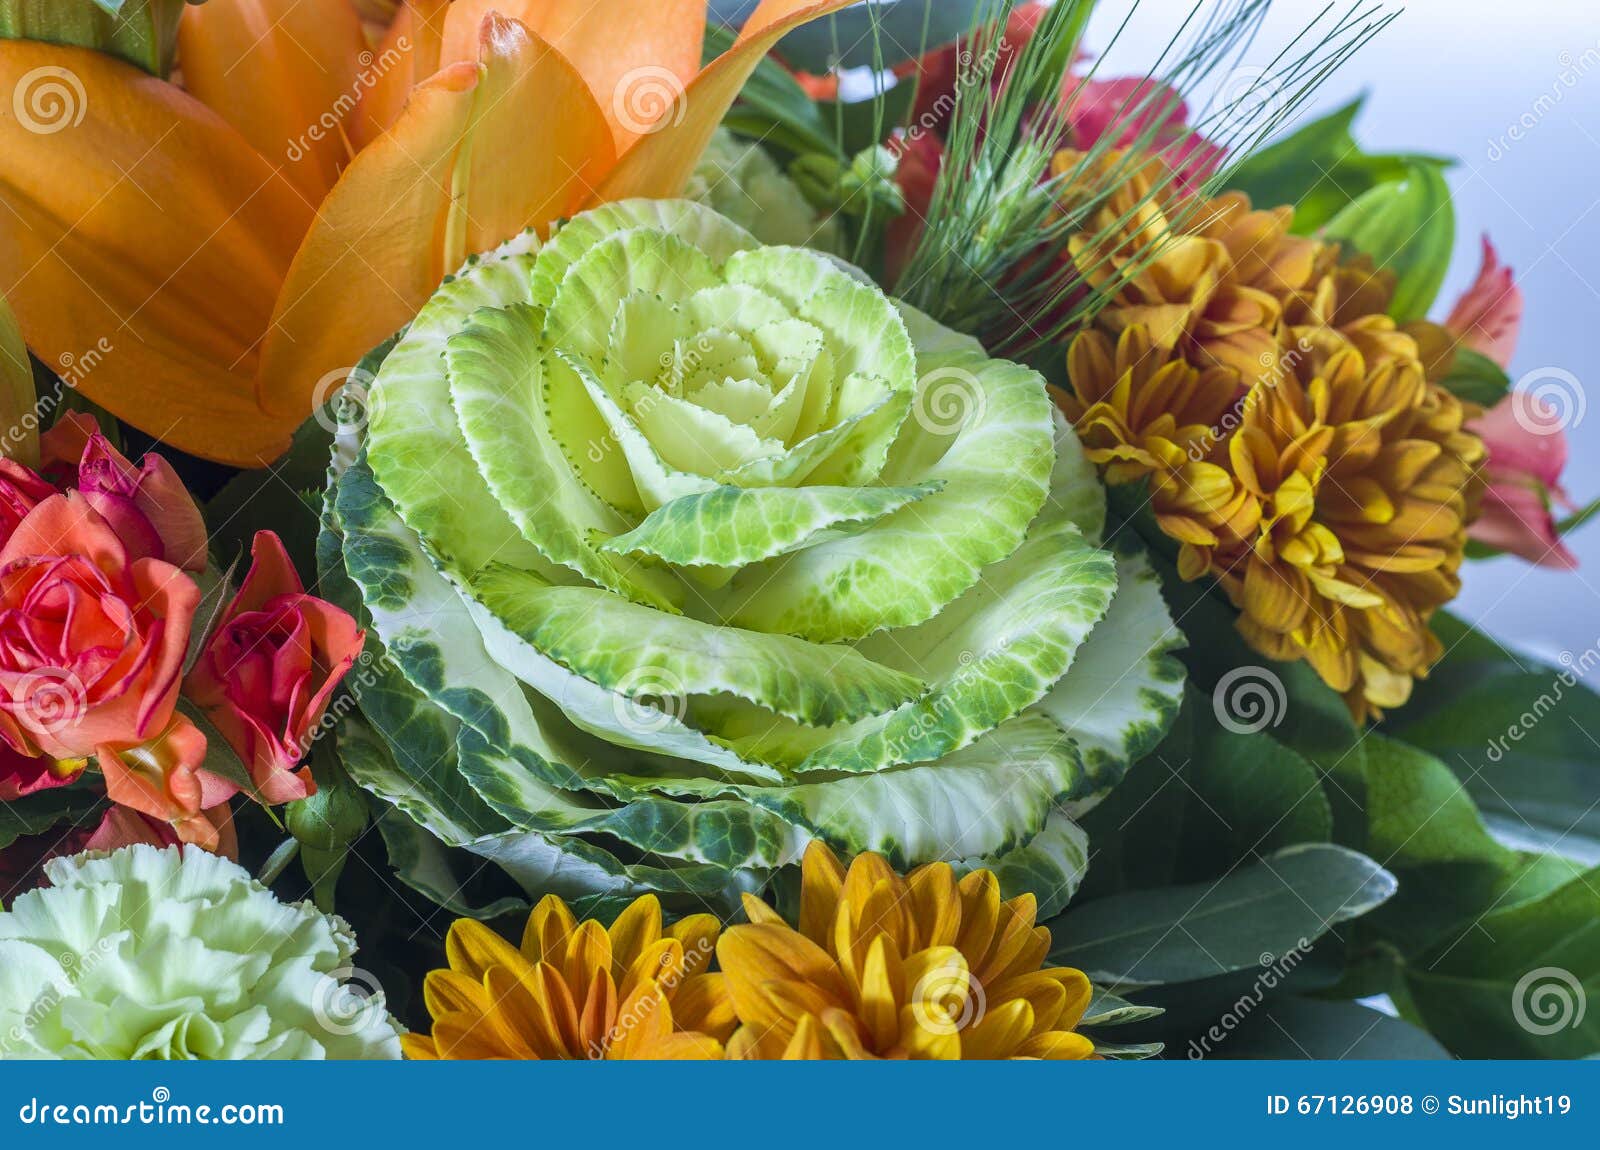 bouquet of brassica